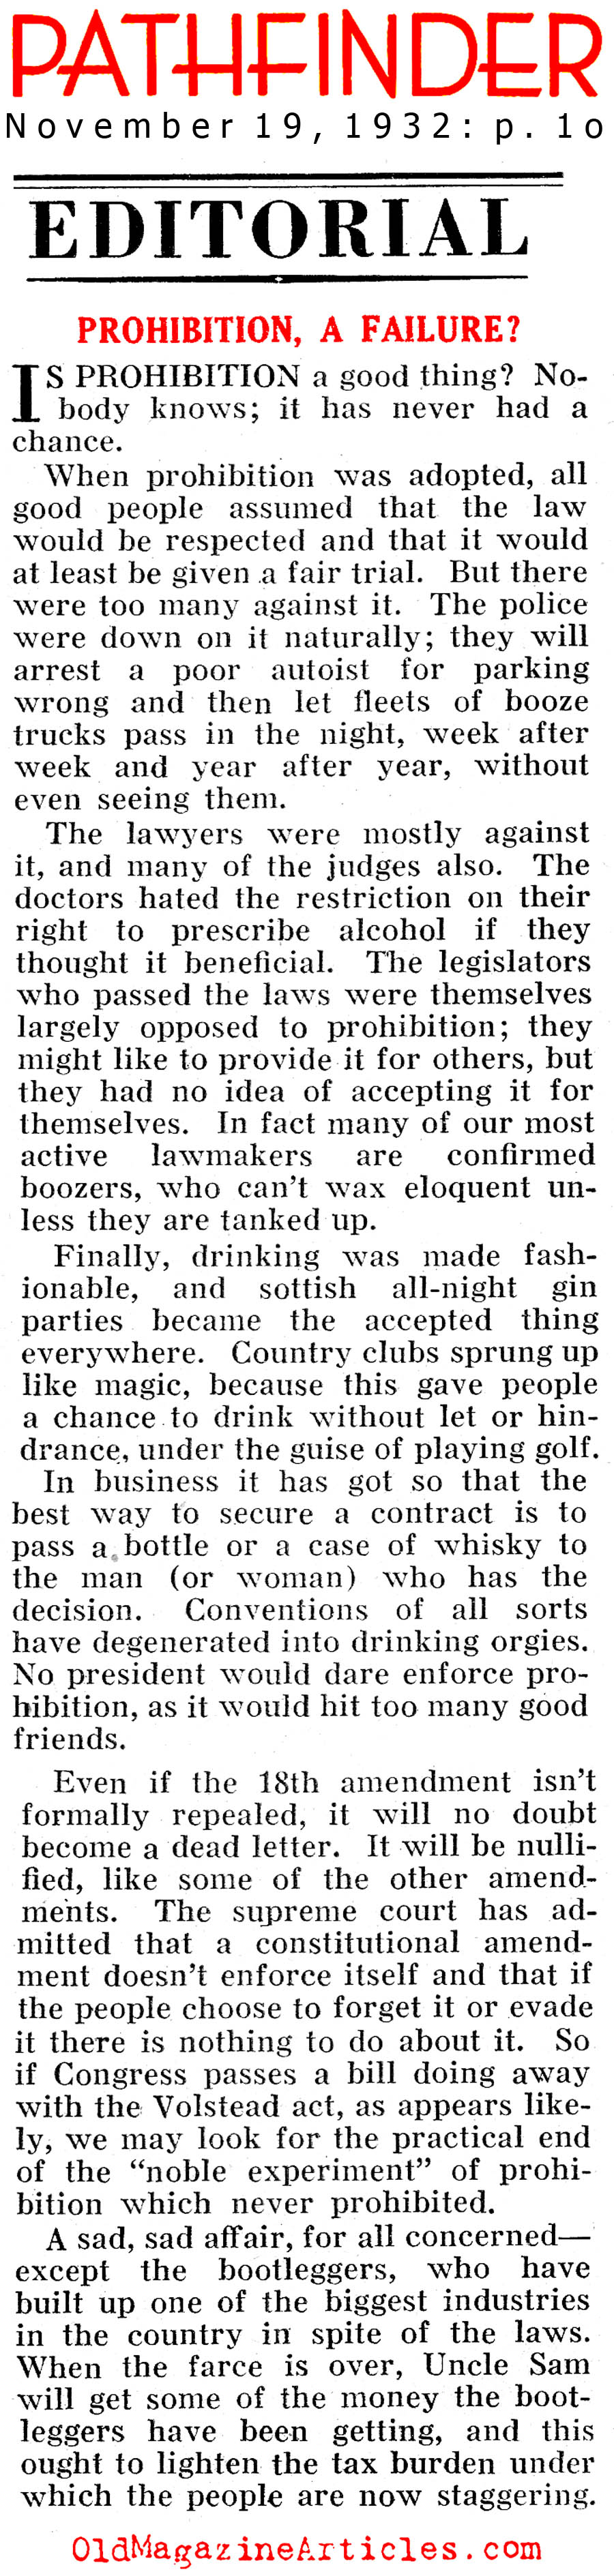 The Non-Success of Prohibition (Pathfinder Magazine, 1932)